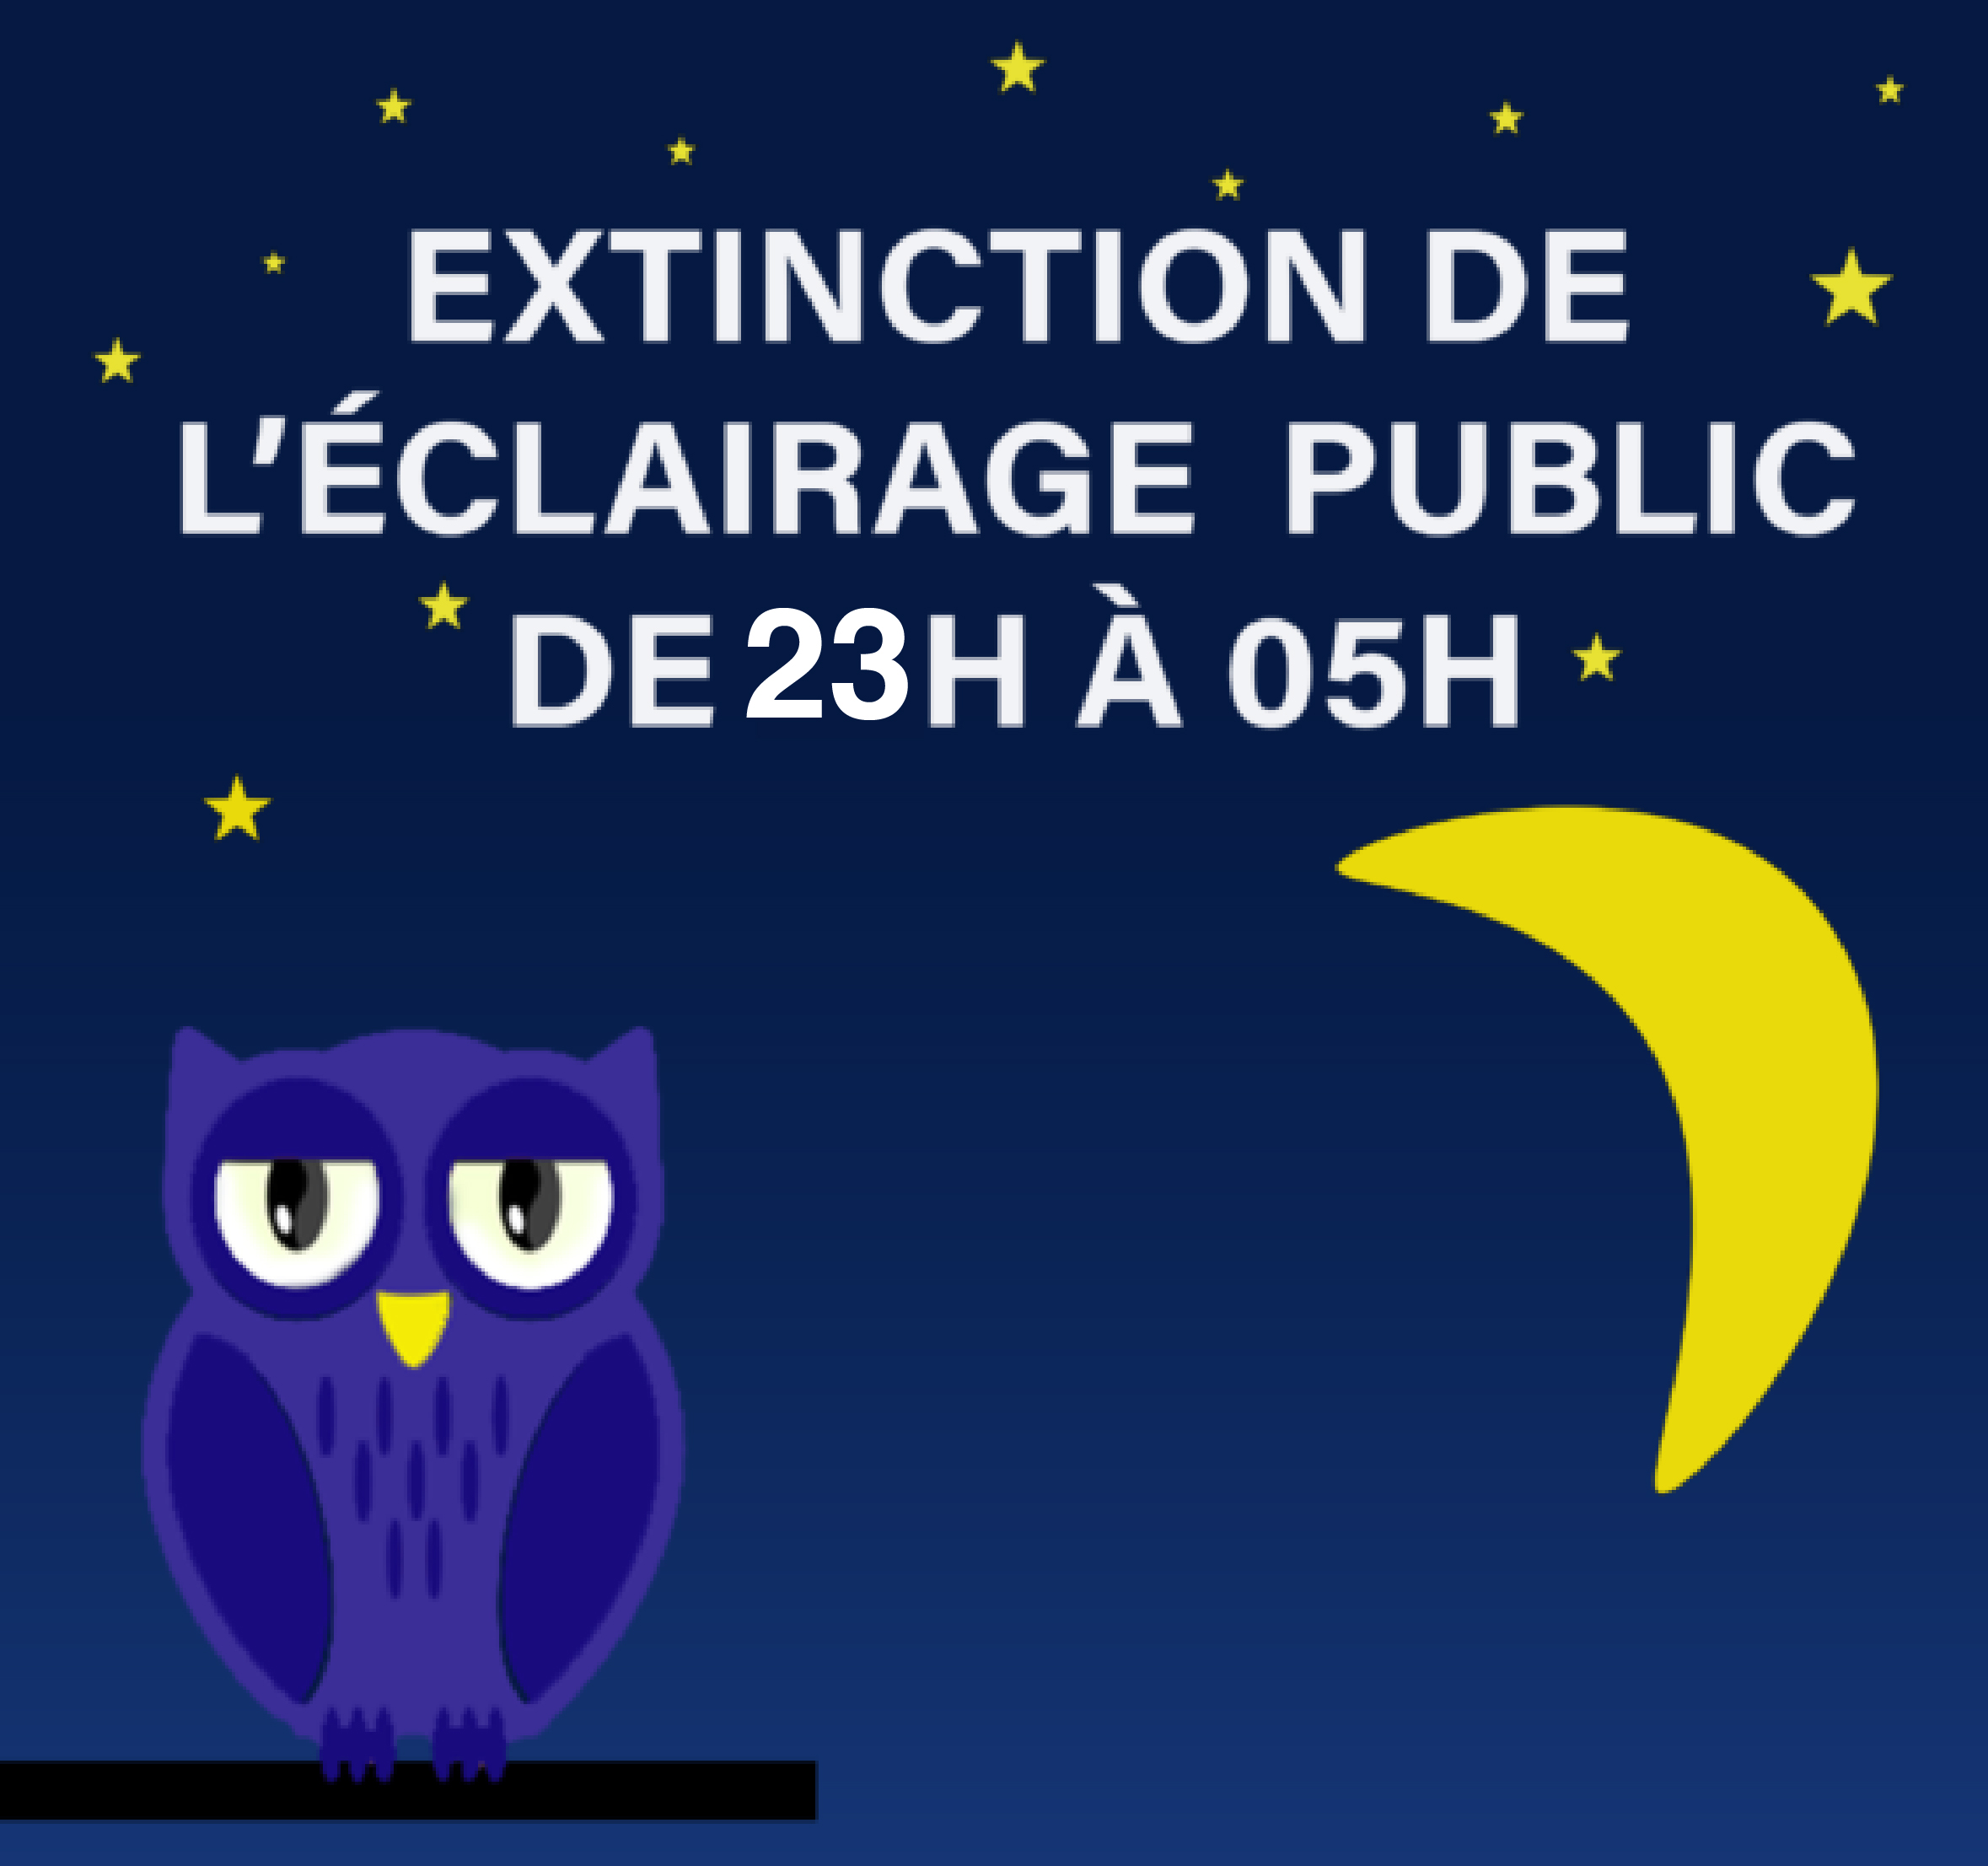 Extinction-eclairage-public.jpg - 621,18 kB